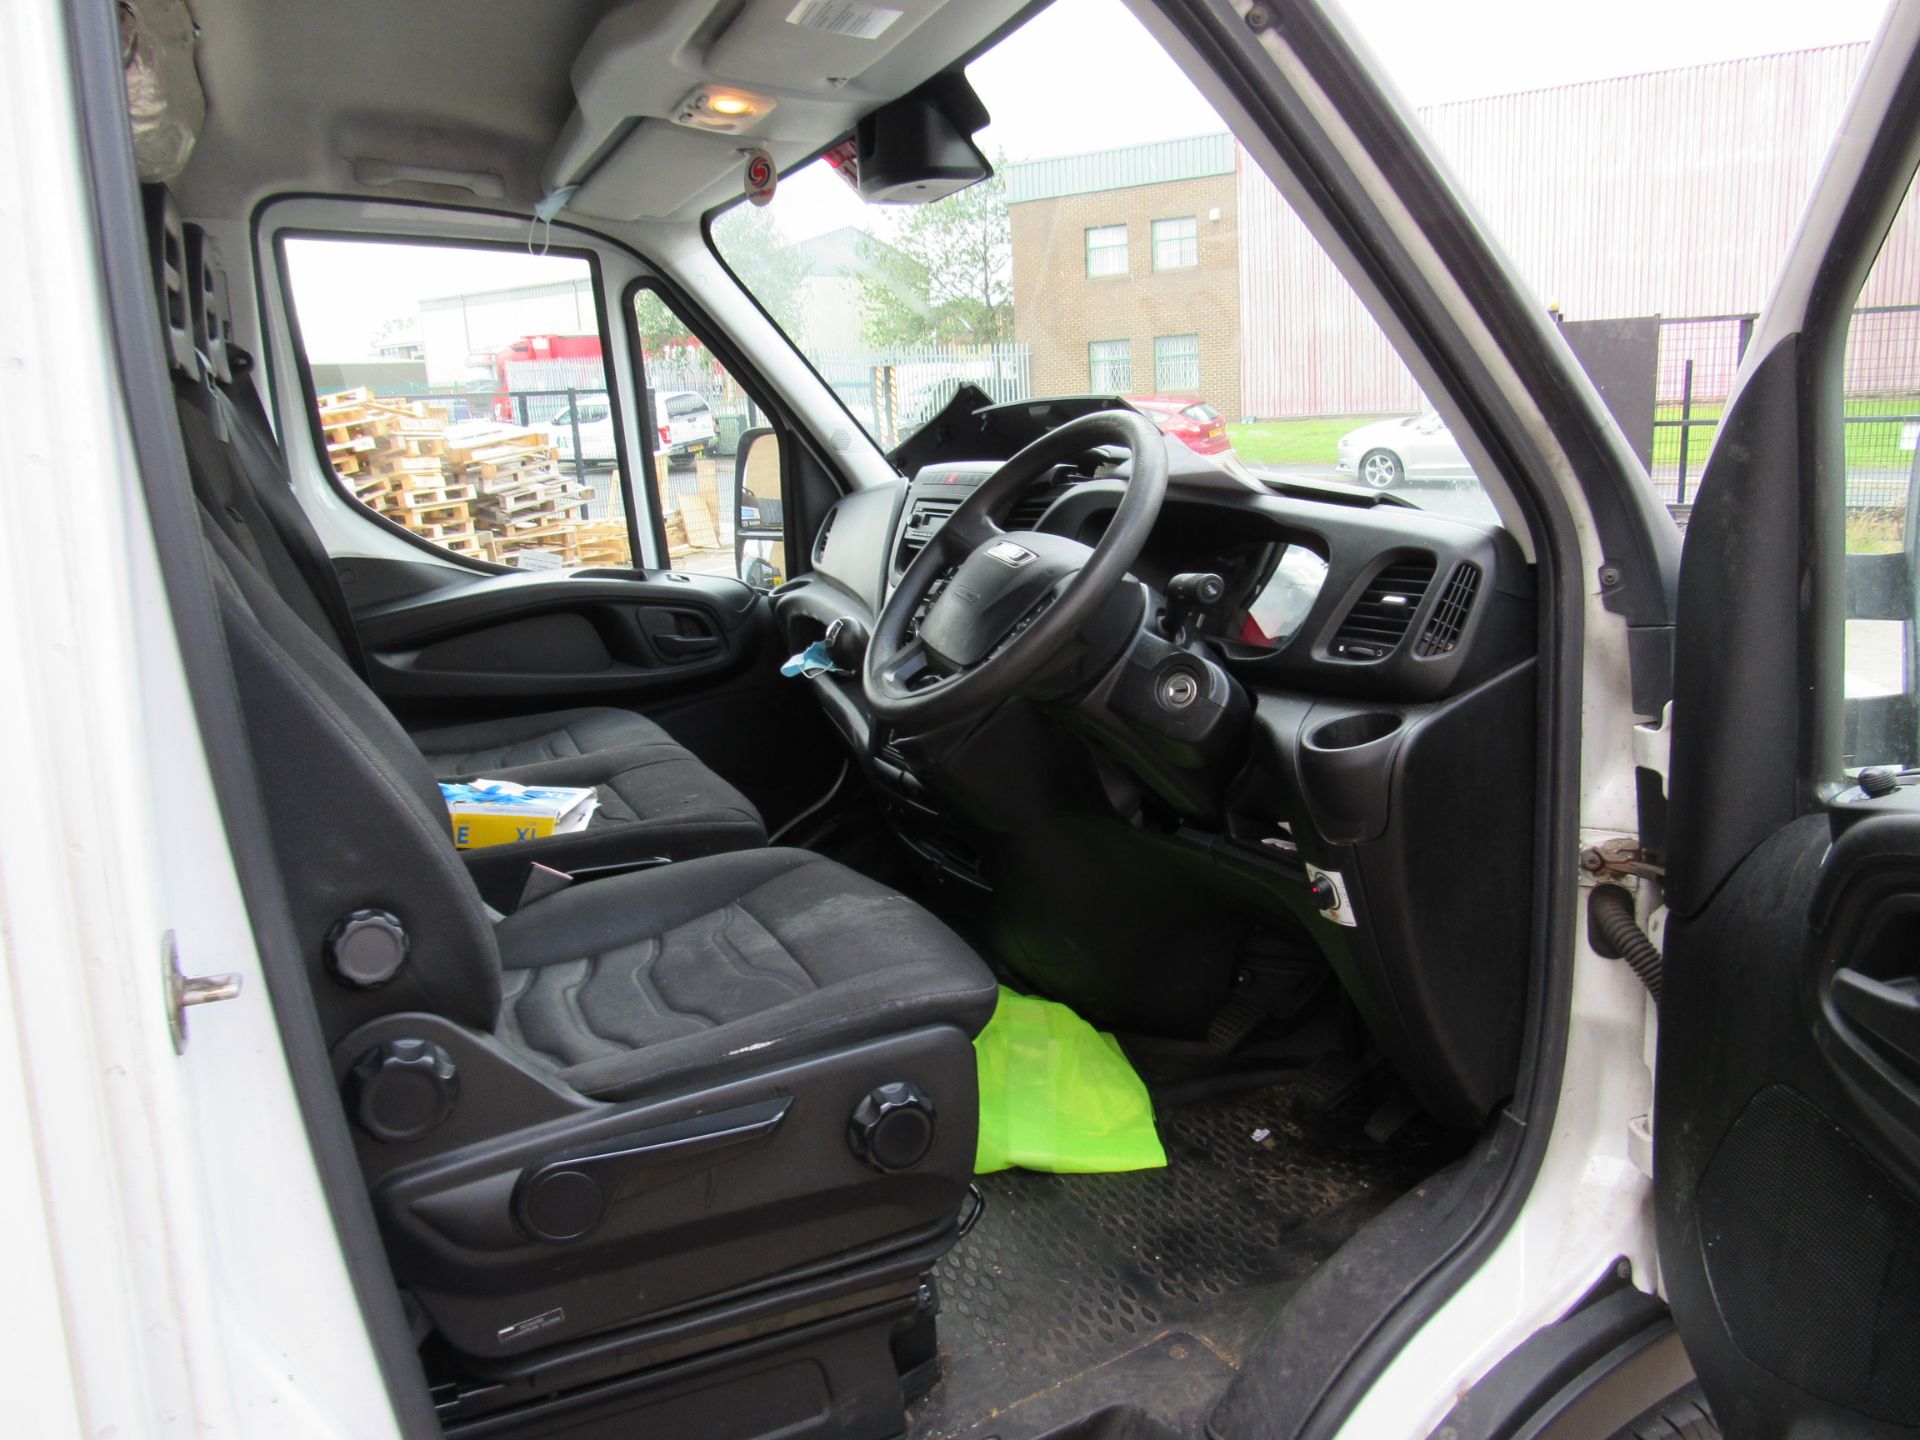 Iveco Daily 35 C15 3750 Luton Van, Registration E6 - Image 10 of 13